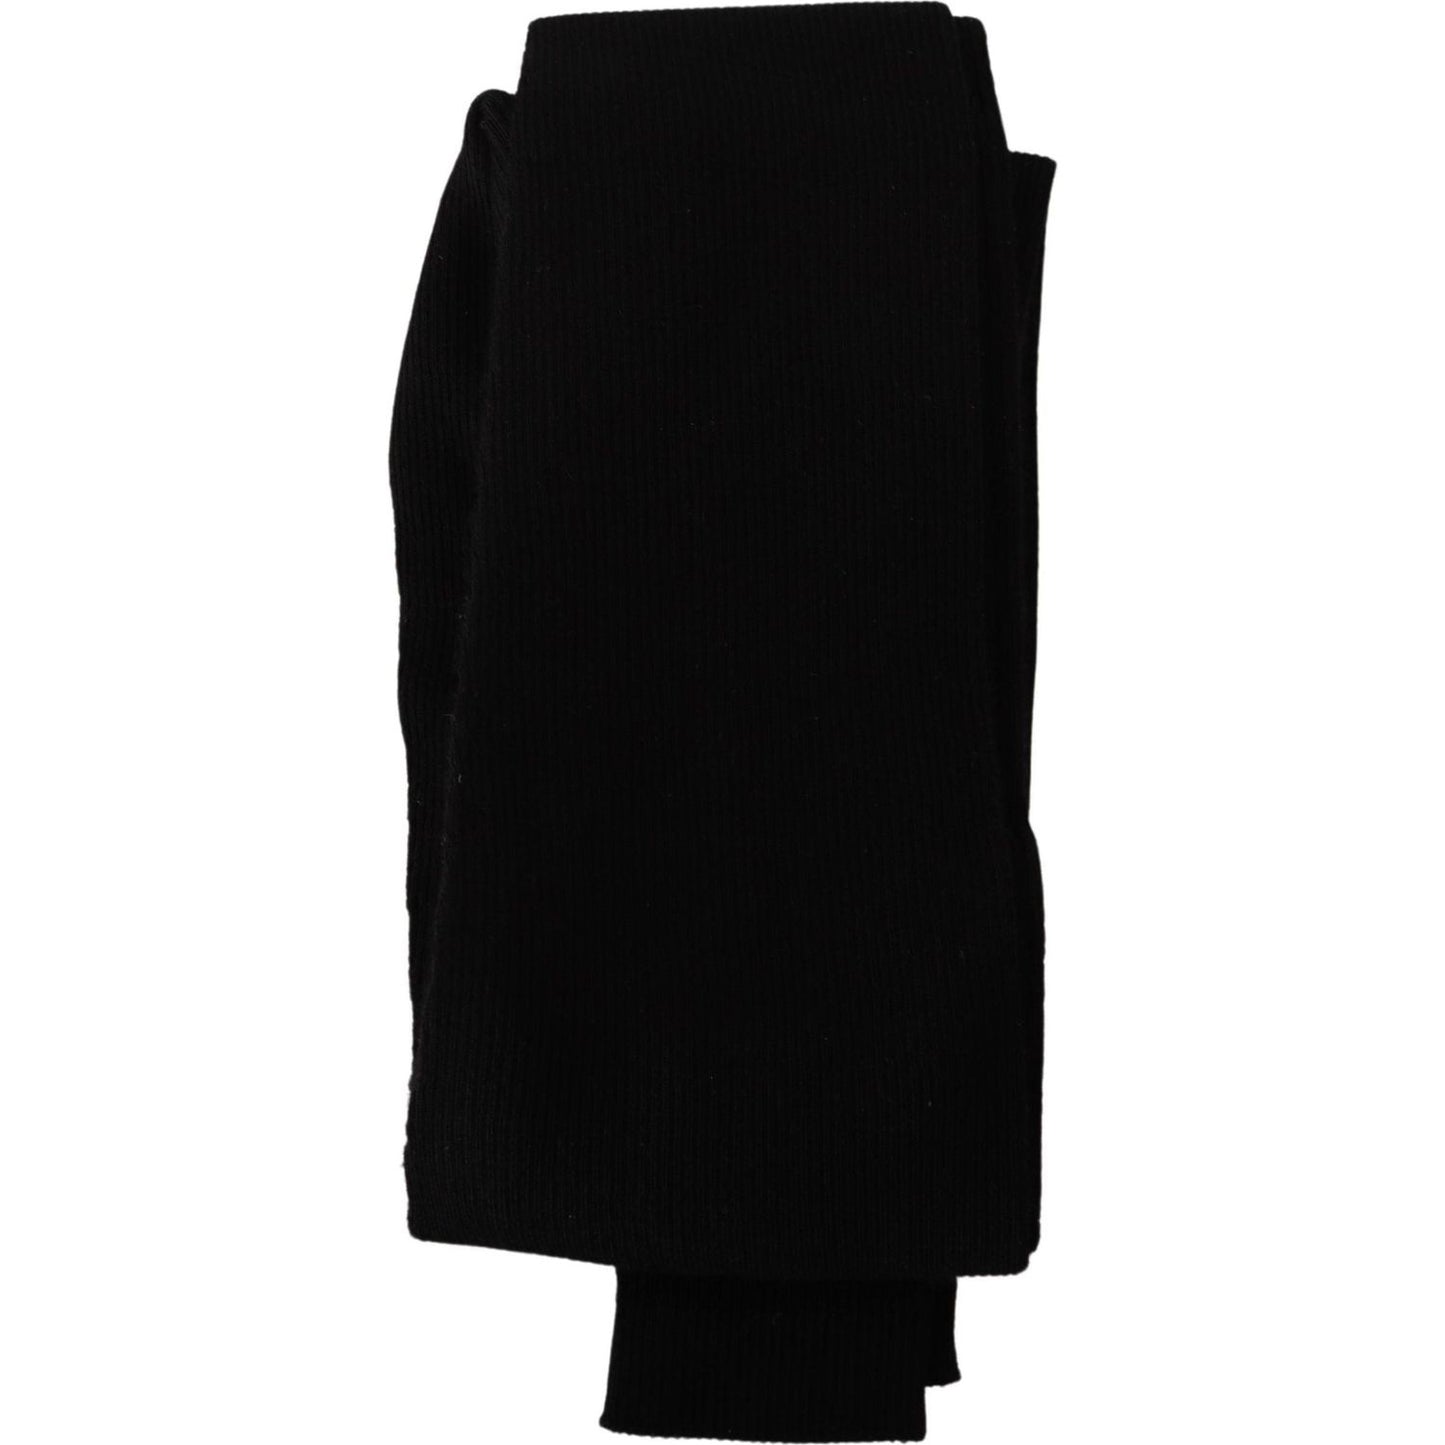 Dolce & Gabbana Elegant Black Cashmere Tights black-100-cashmere-tights-stocking-socks